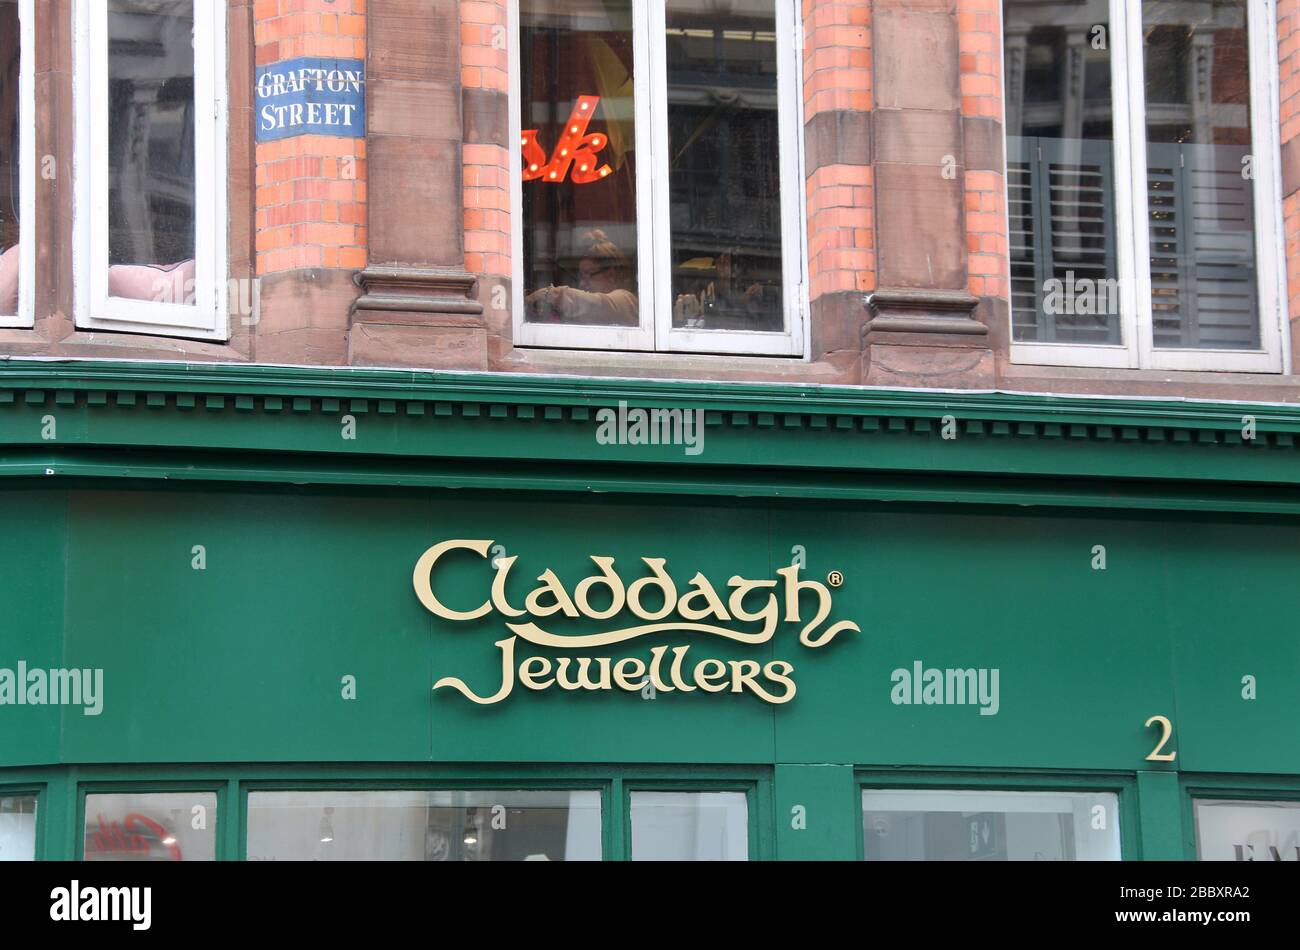 Claddagh Jewelers in der Grafton Street in Dublin Stockfoto